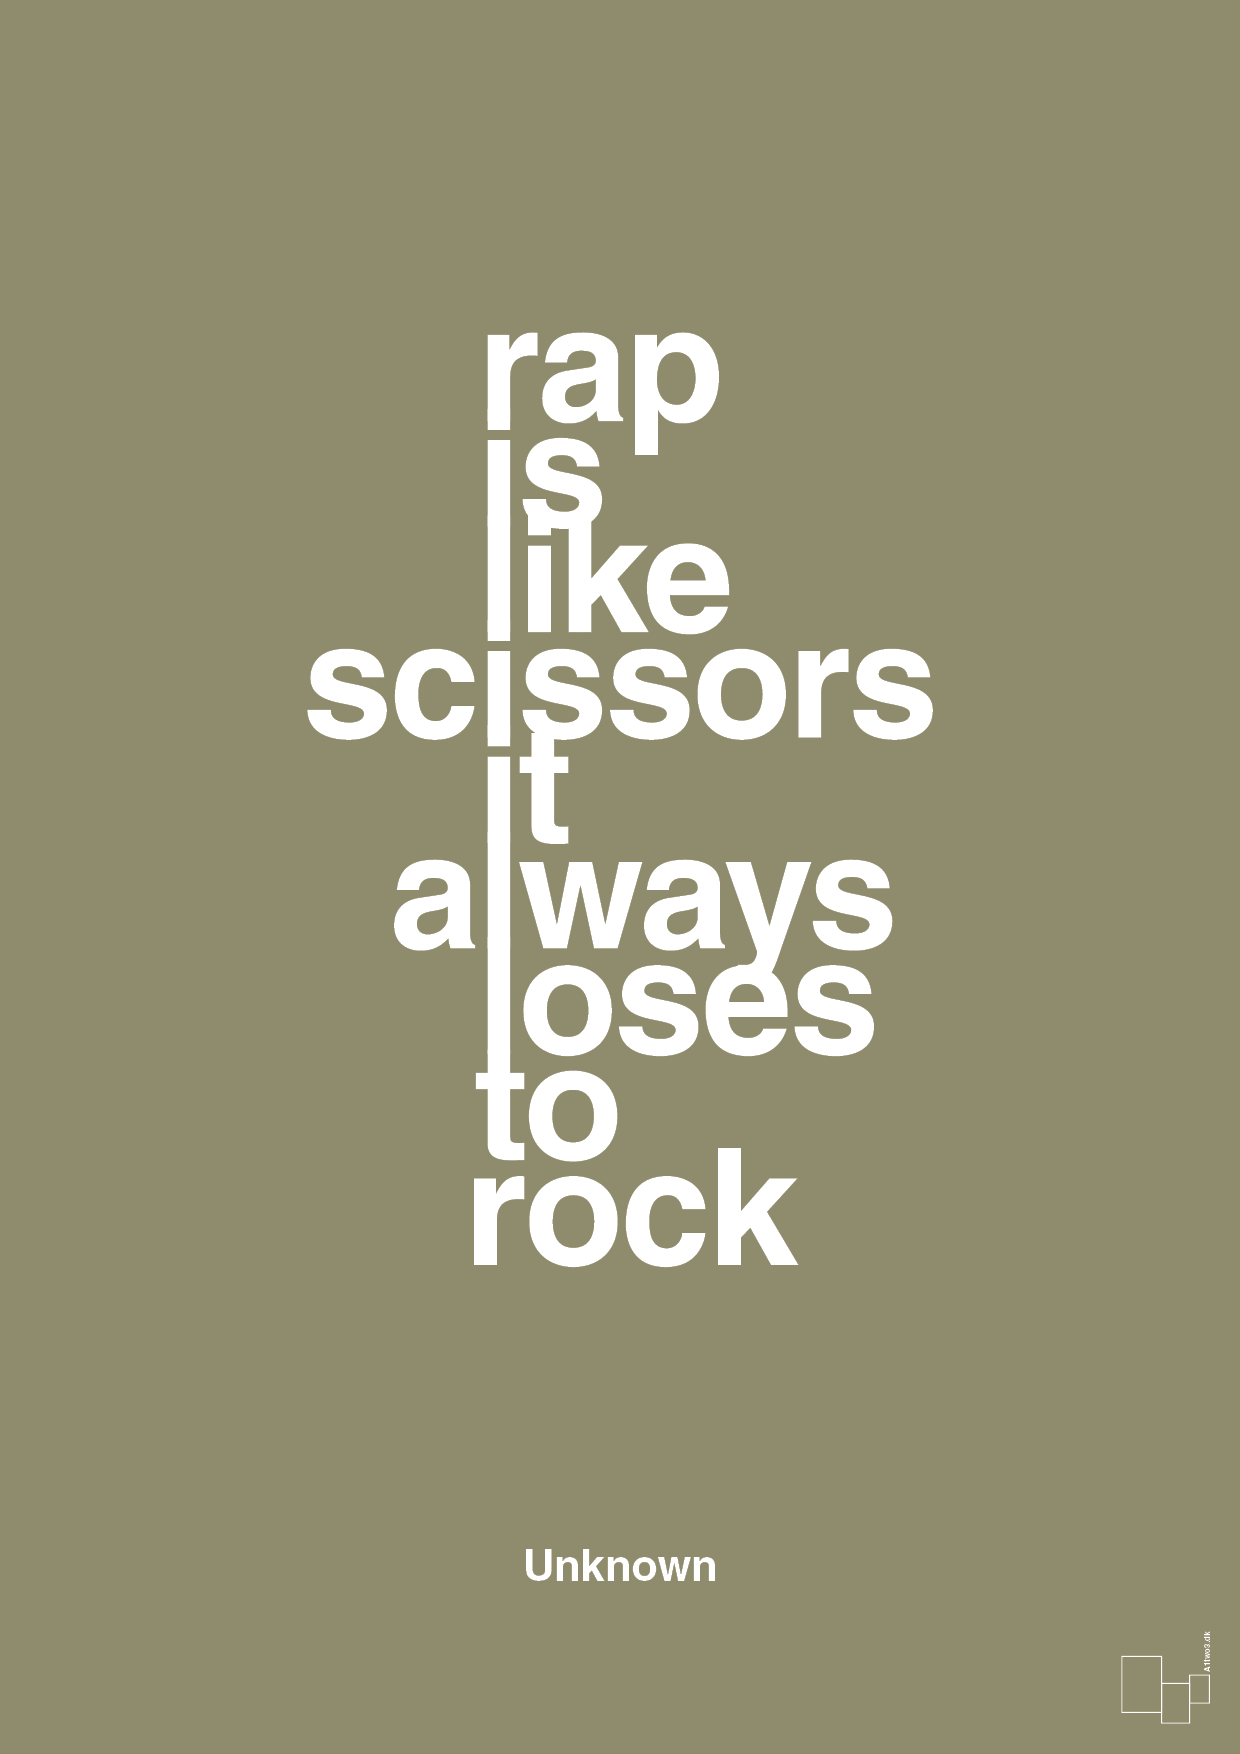 rap is like scissors it always loses to rock - Plakat med Citater i Misty Forrest